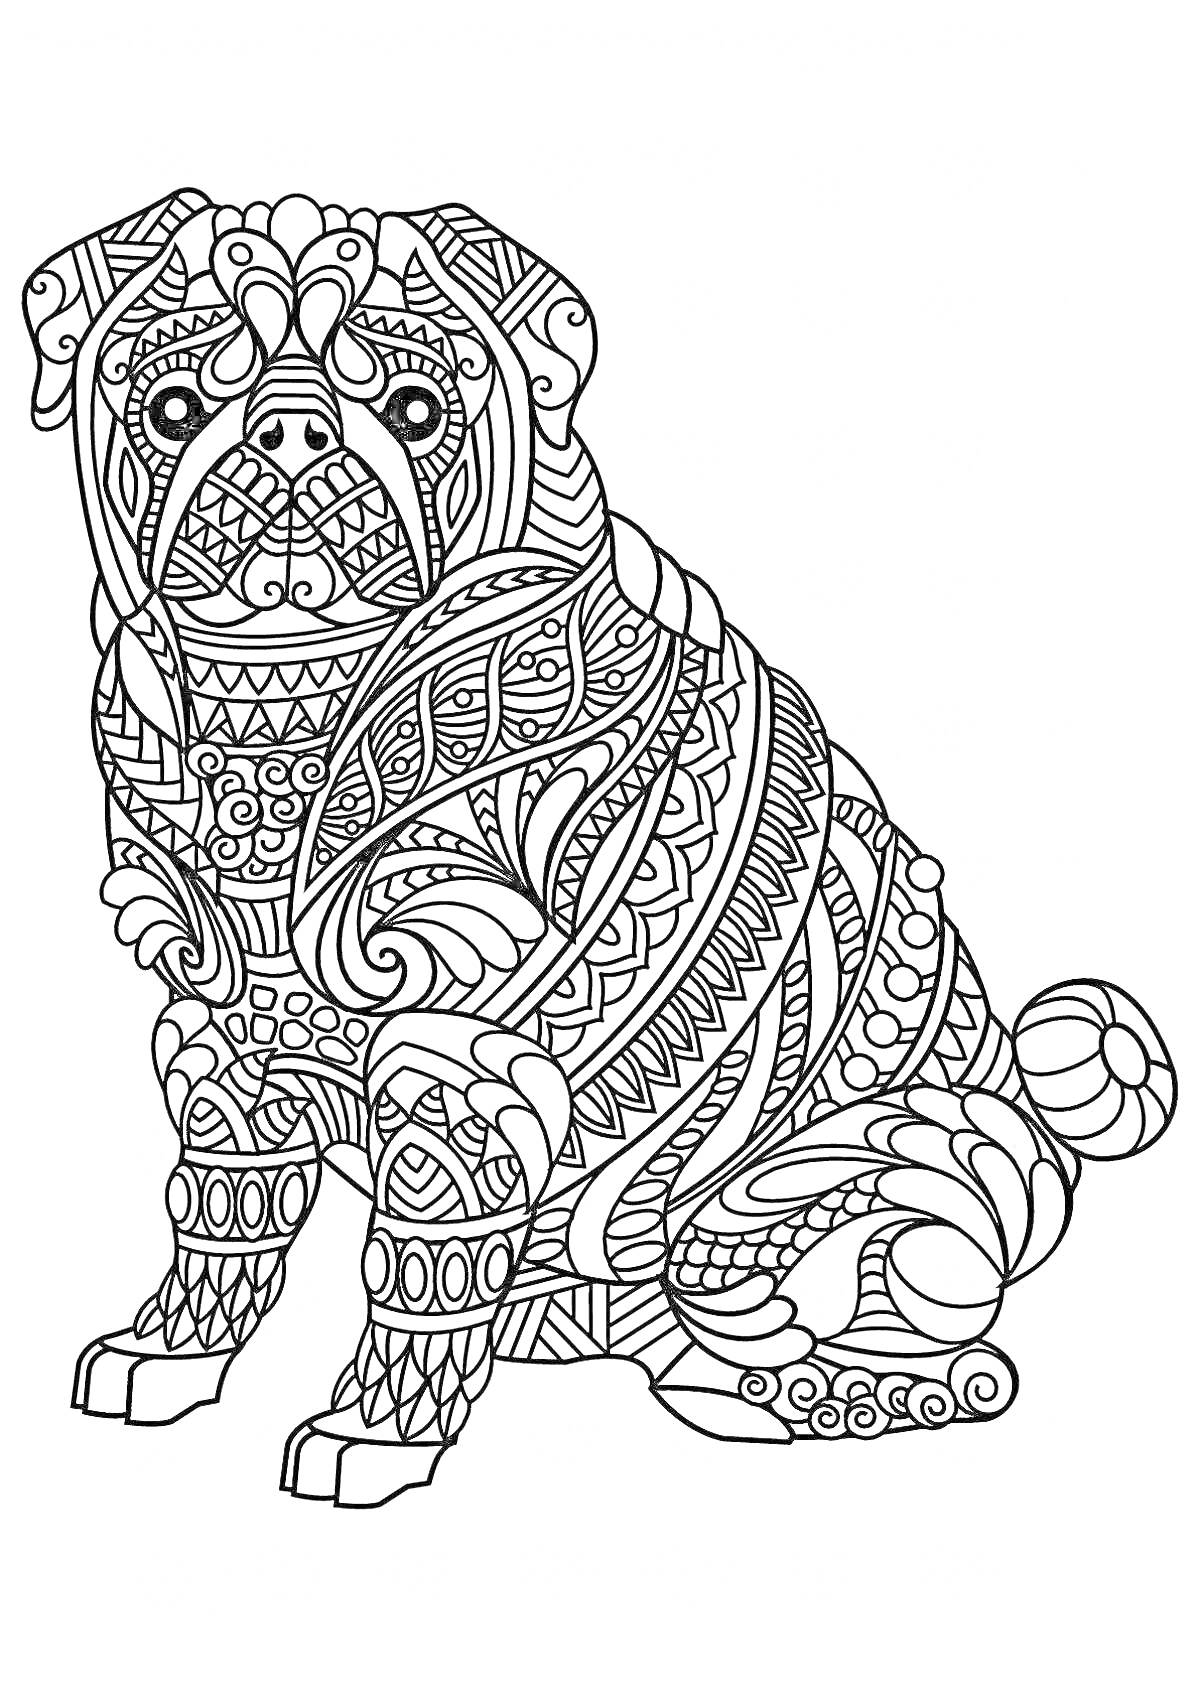 Раскраска Раскраска - собака с узорами и деталями